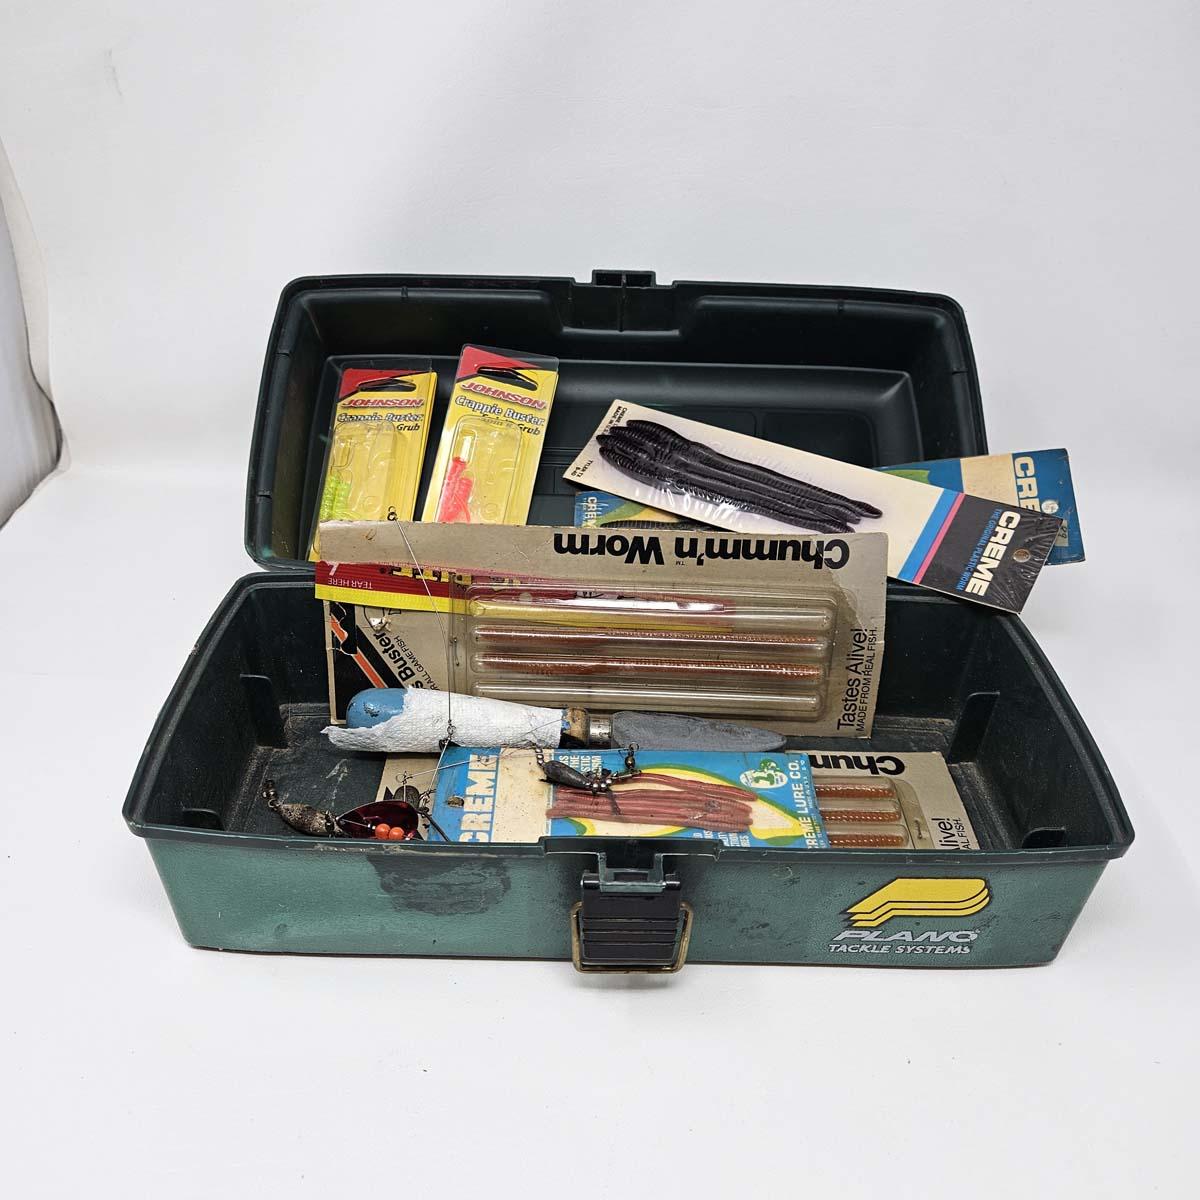 Plano Green Fishing Tackle Box with Supplies